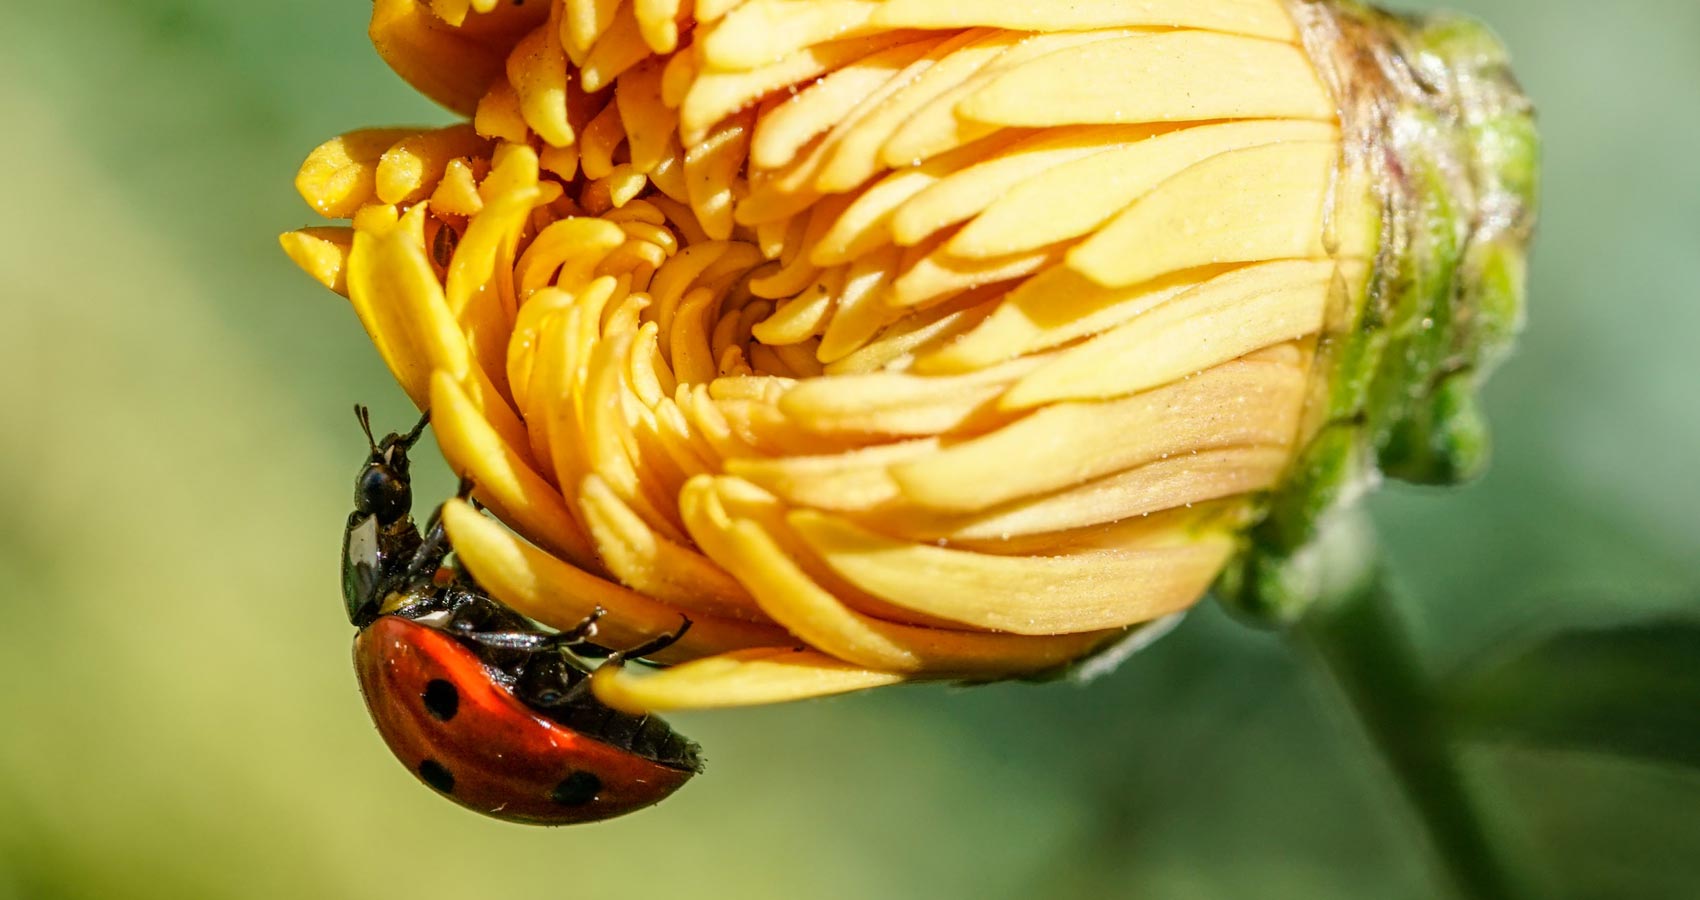 Grumpy Ladybug, poetry by Vidya Venkataramanan at Spilwords.com